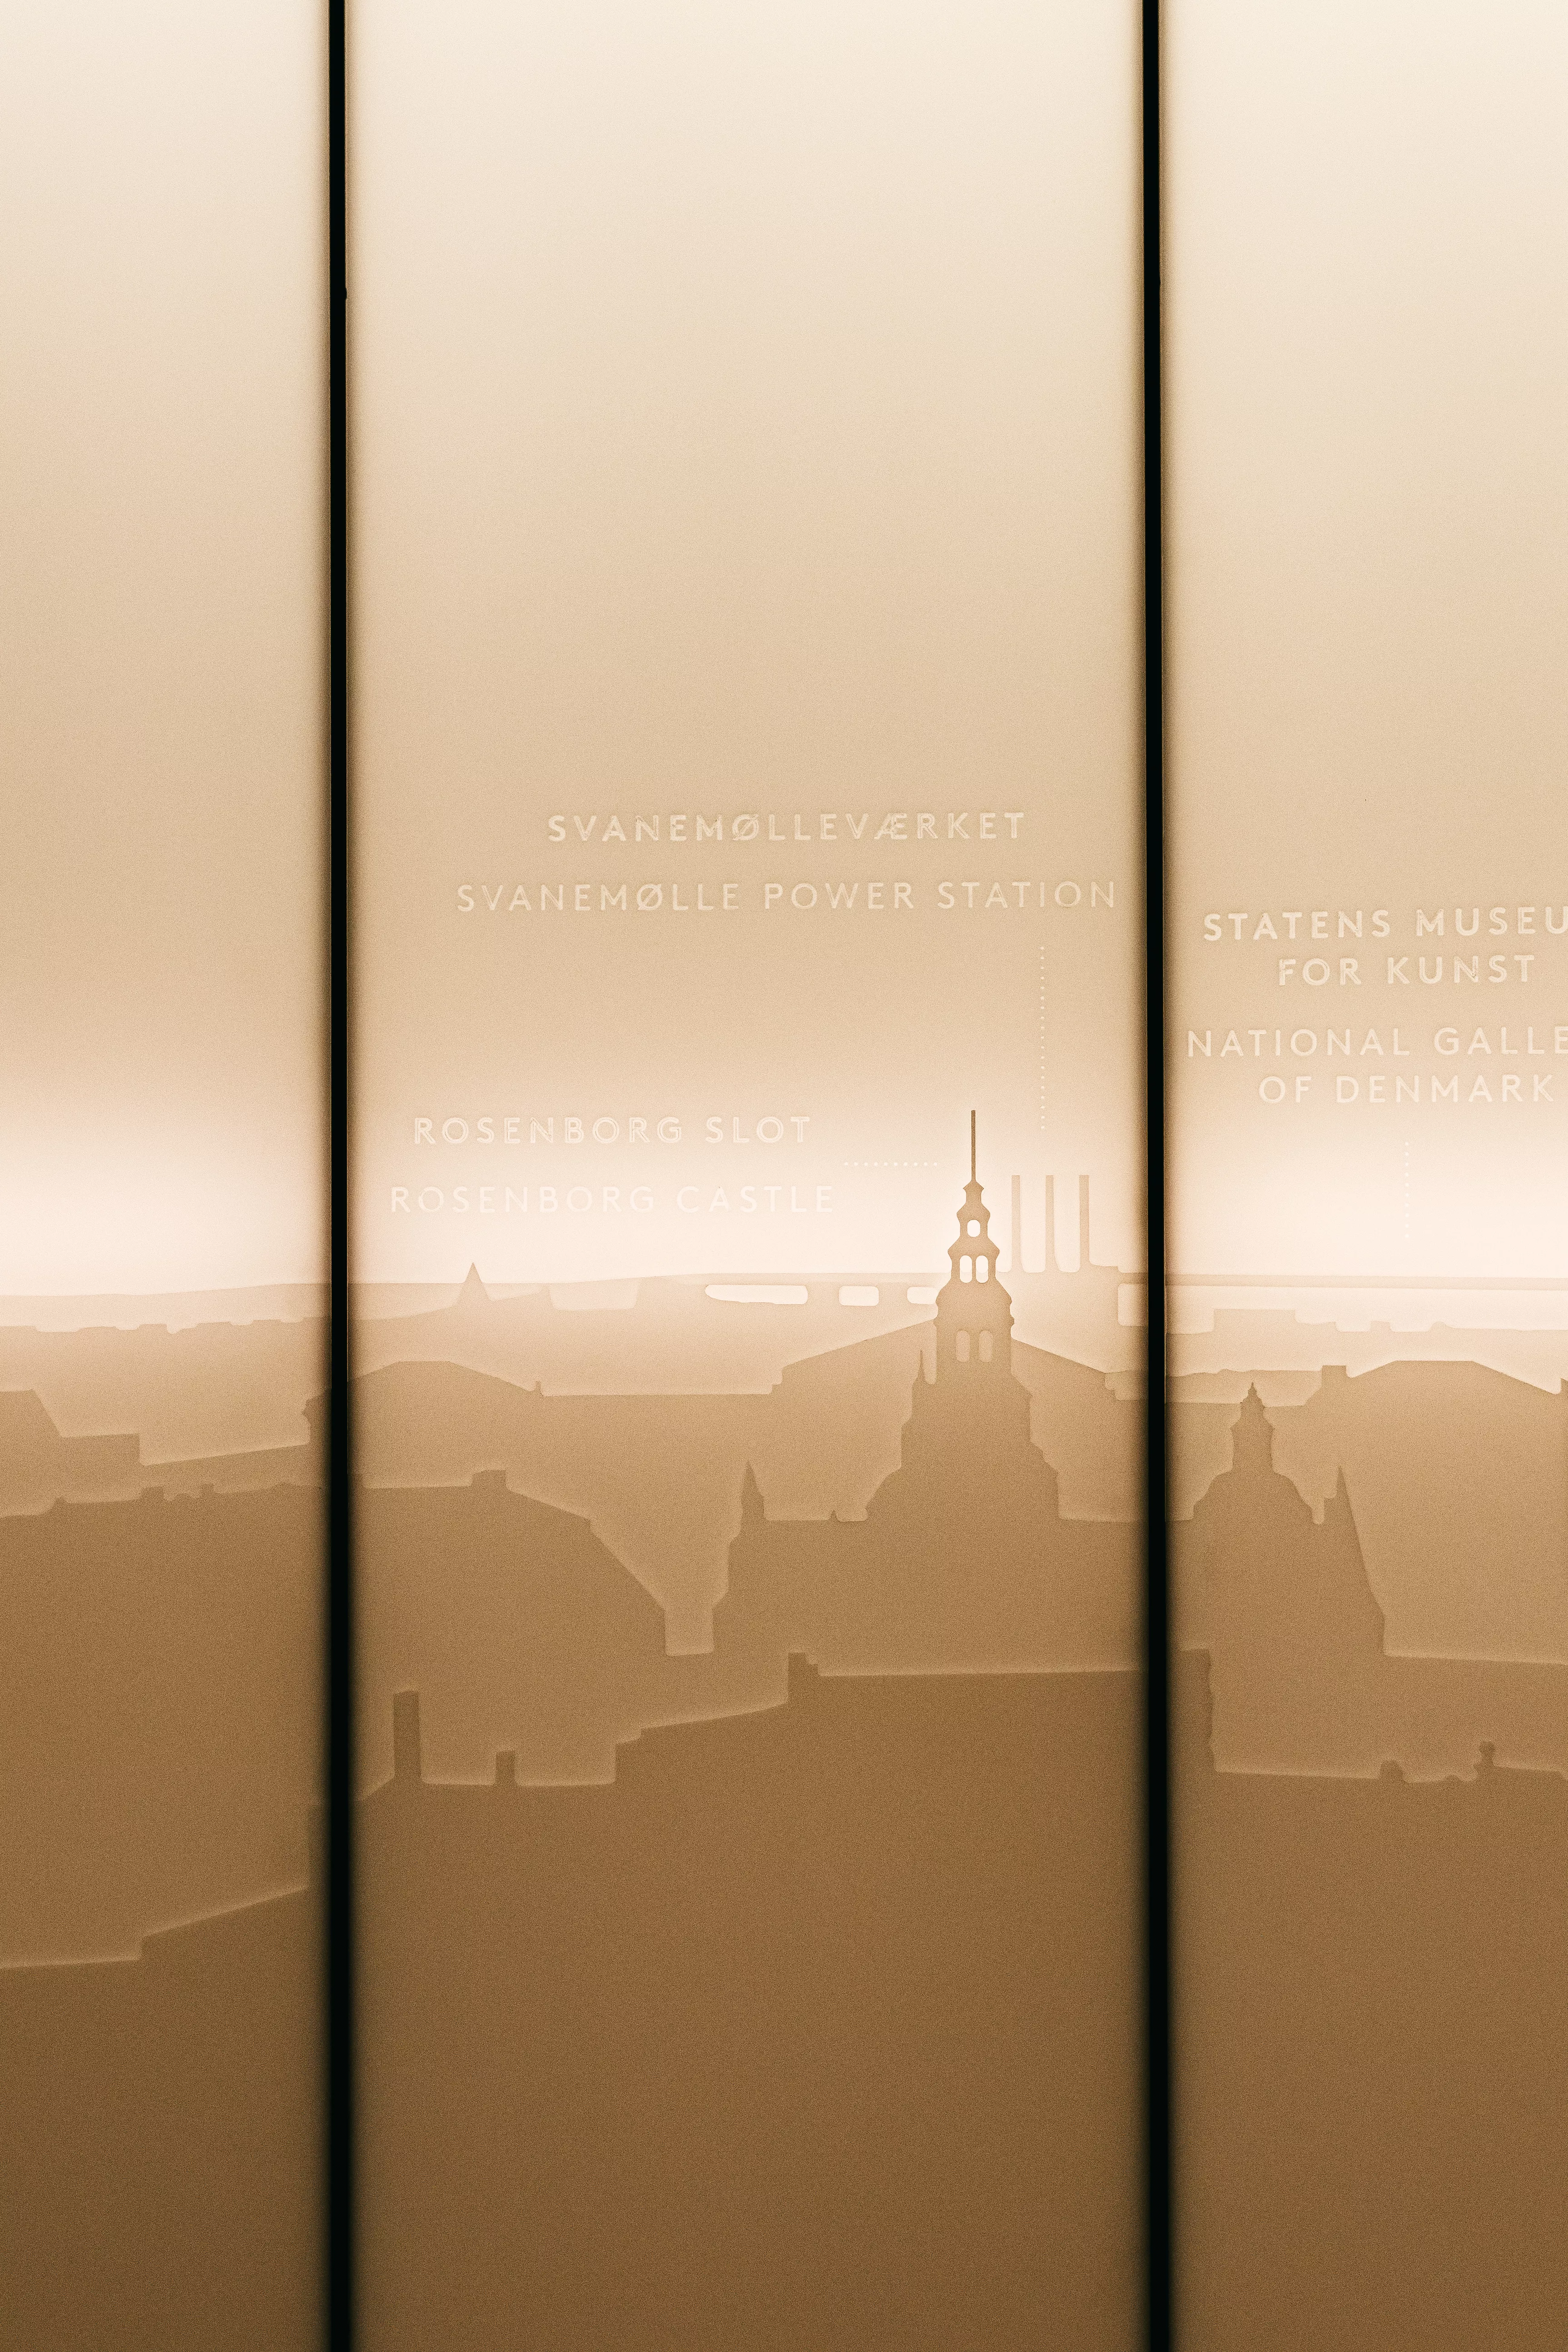 HIMACS portrays the city in the new Museum of Copenhagen